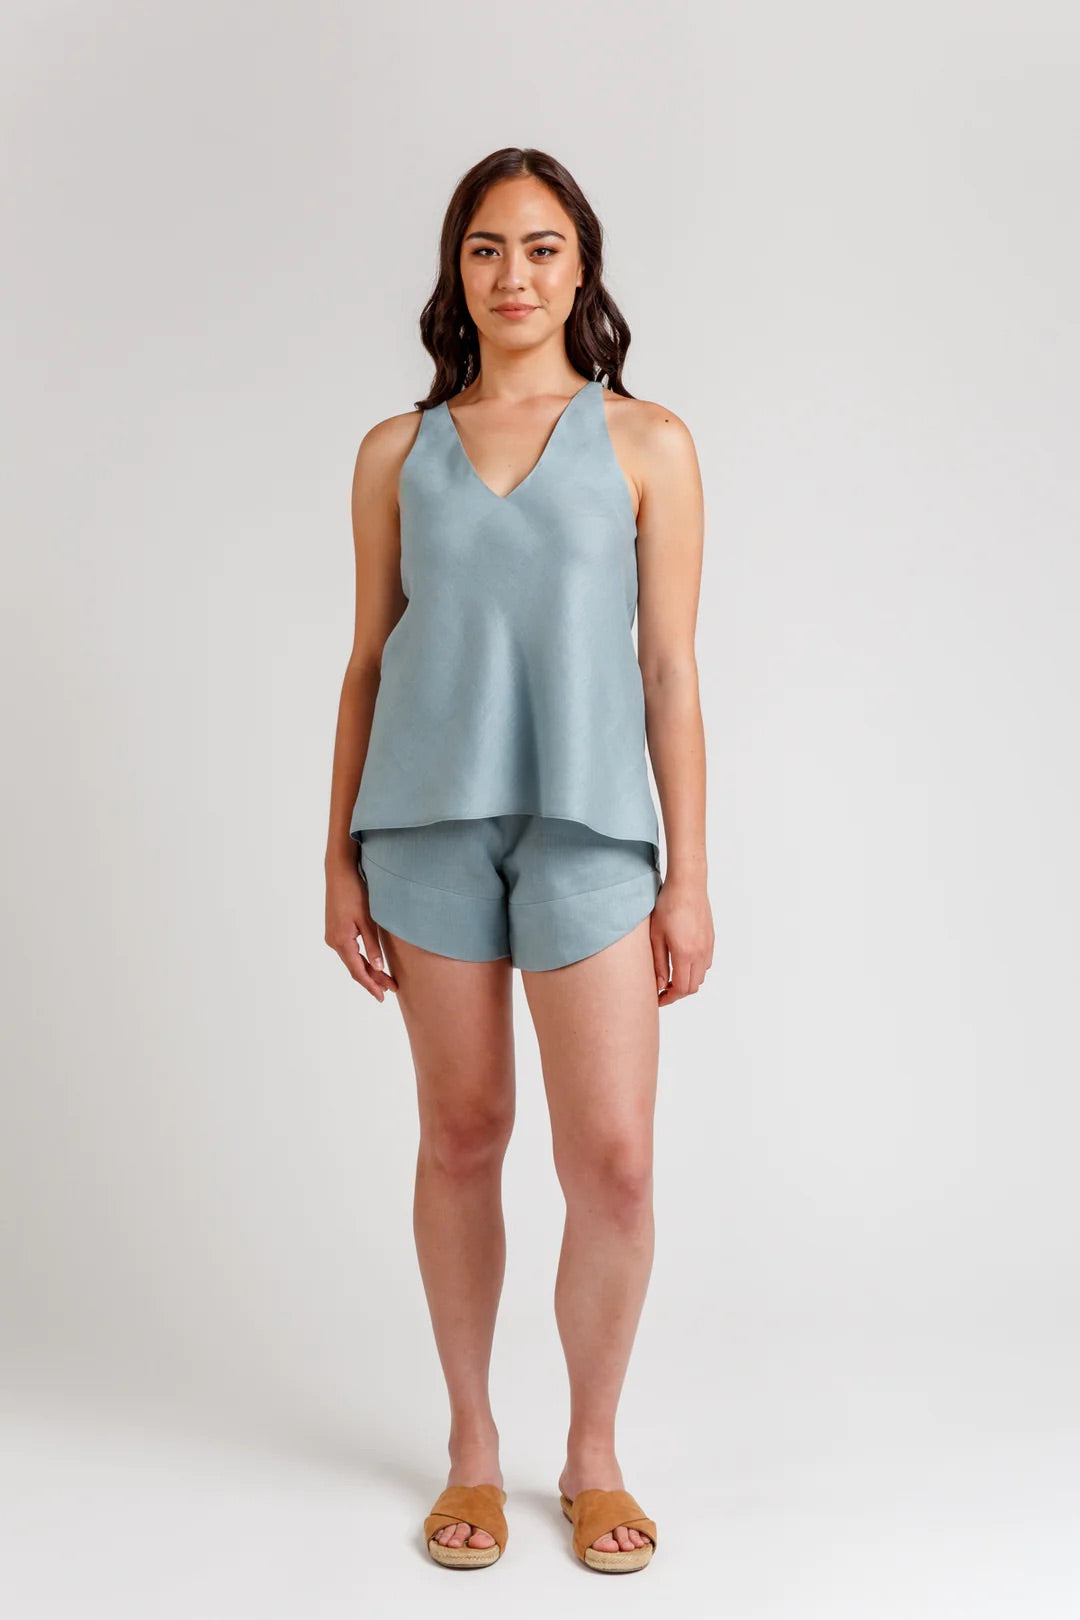 Megan Nielsen - Reef Camisole & Shorts Set Sewing Pattern